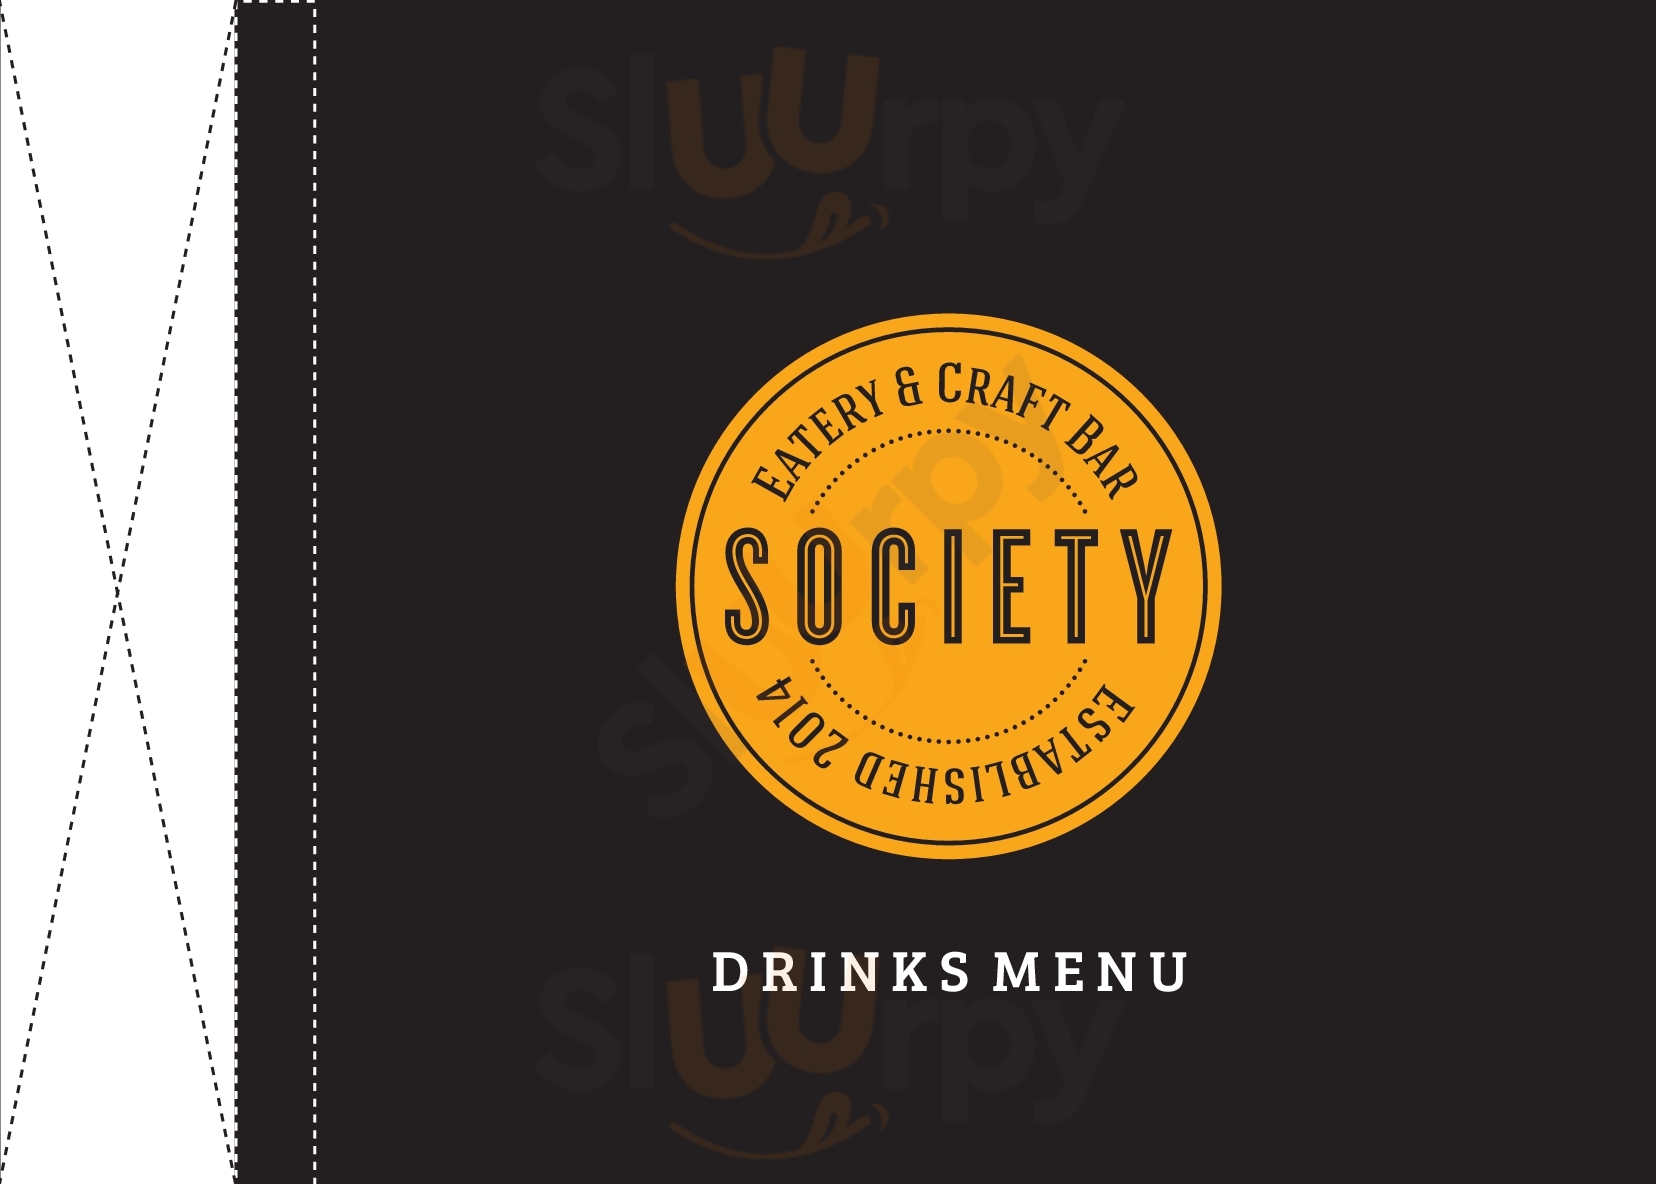 Society Eatery & Craft Bar Johannesburg Menu - 1